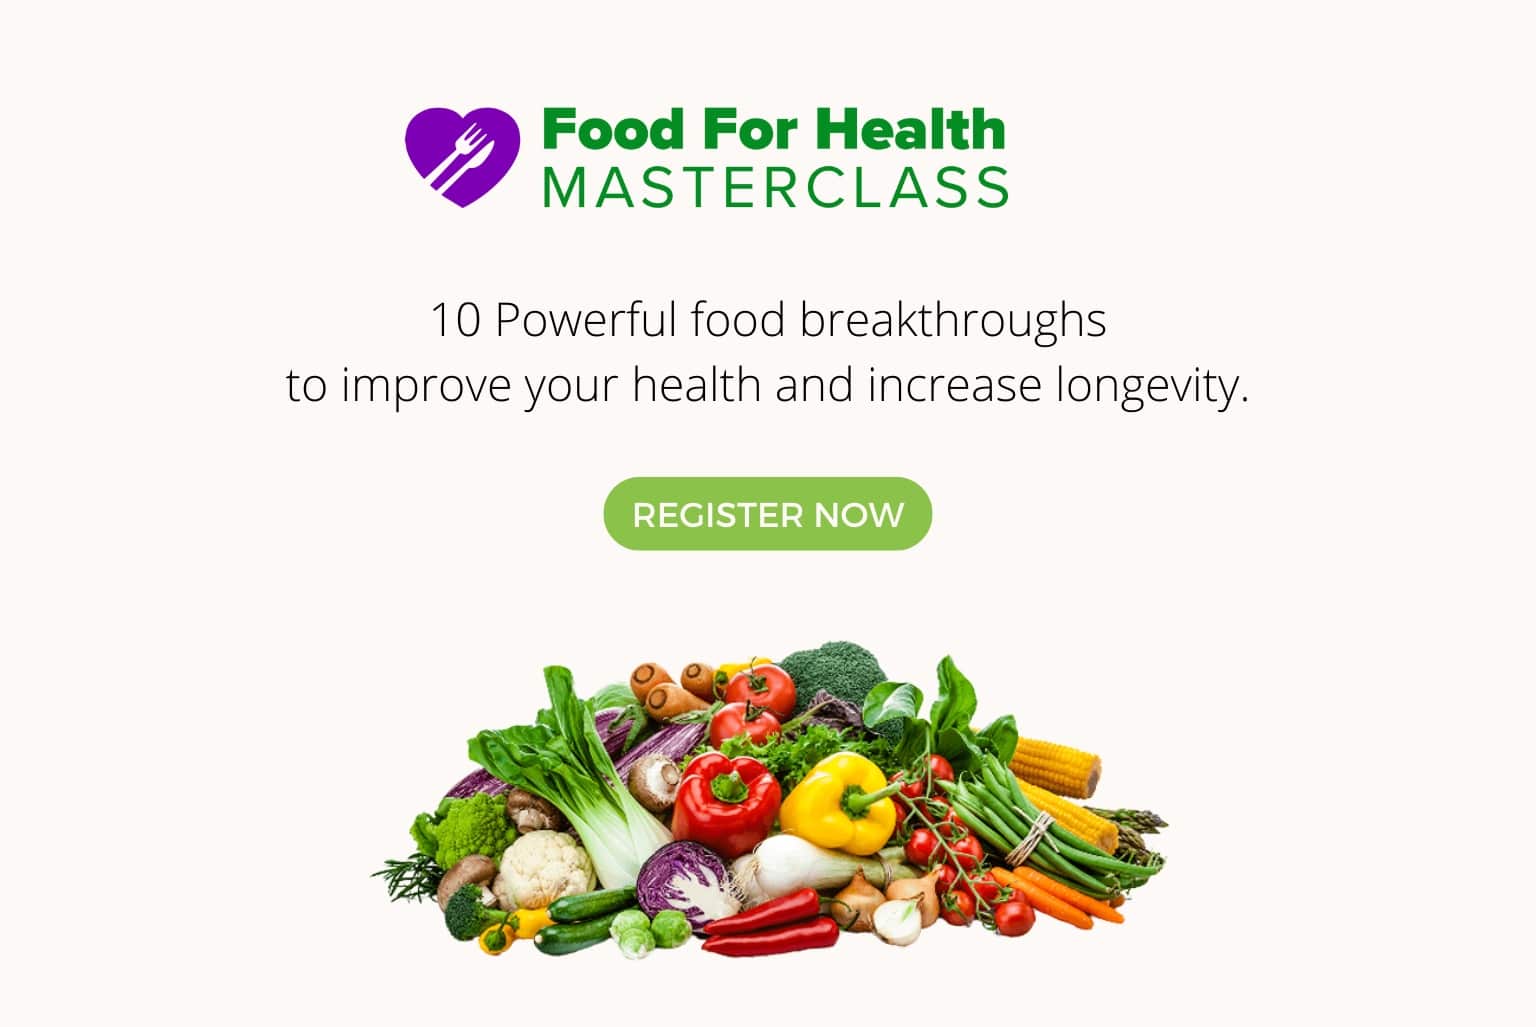 Food revolution network food for health masterclass